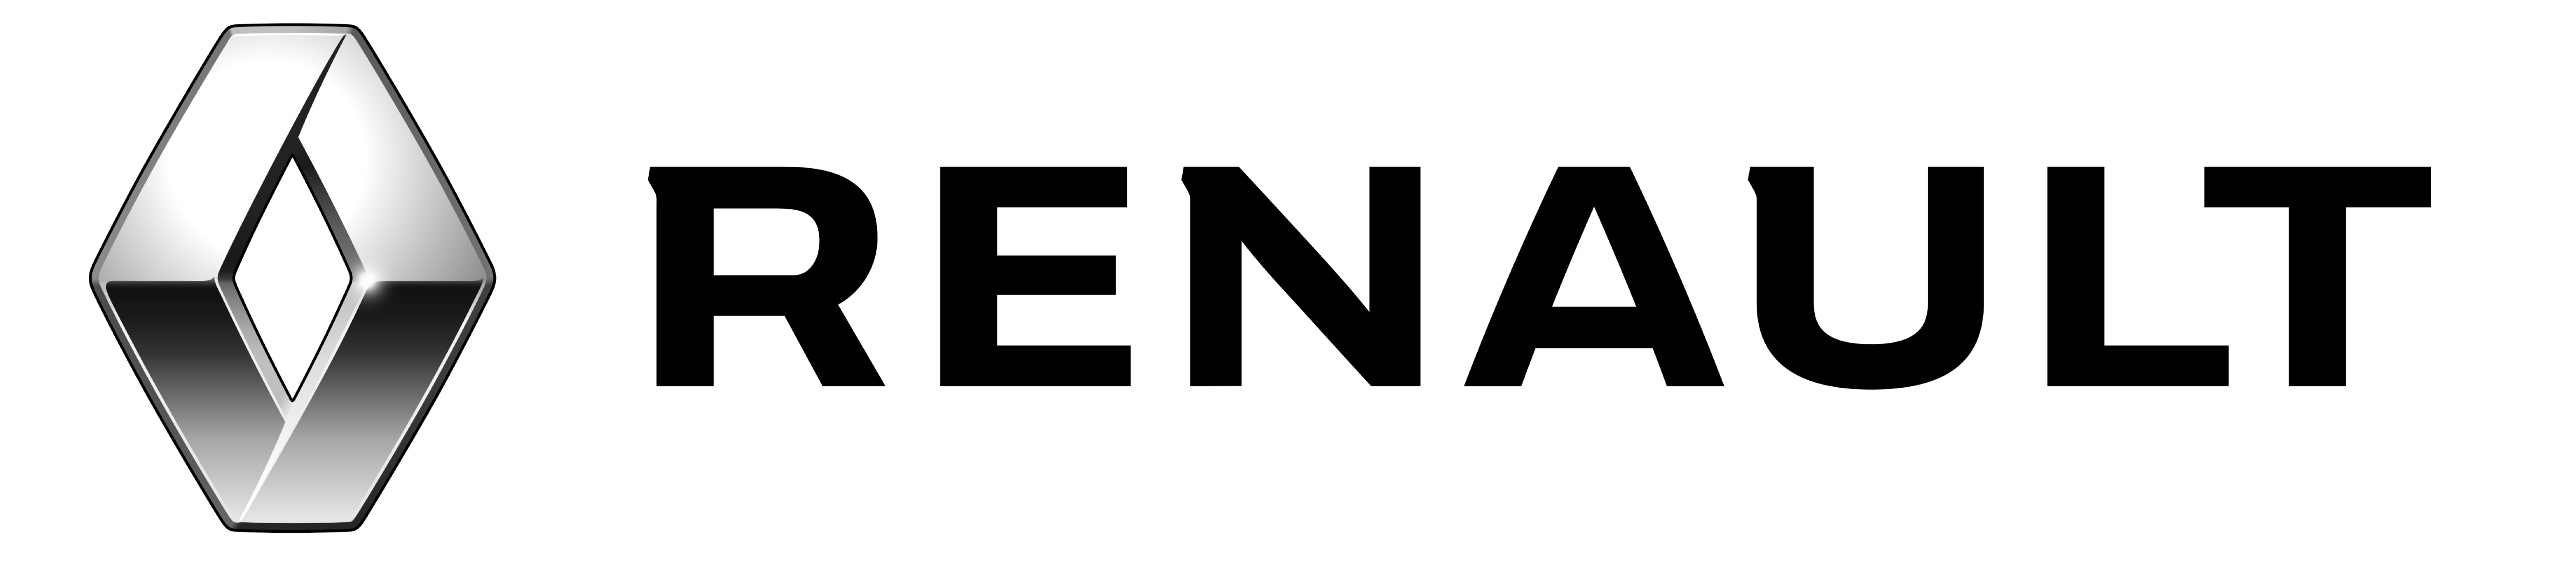 renault-logo-vector